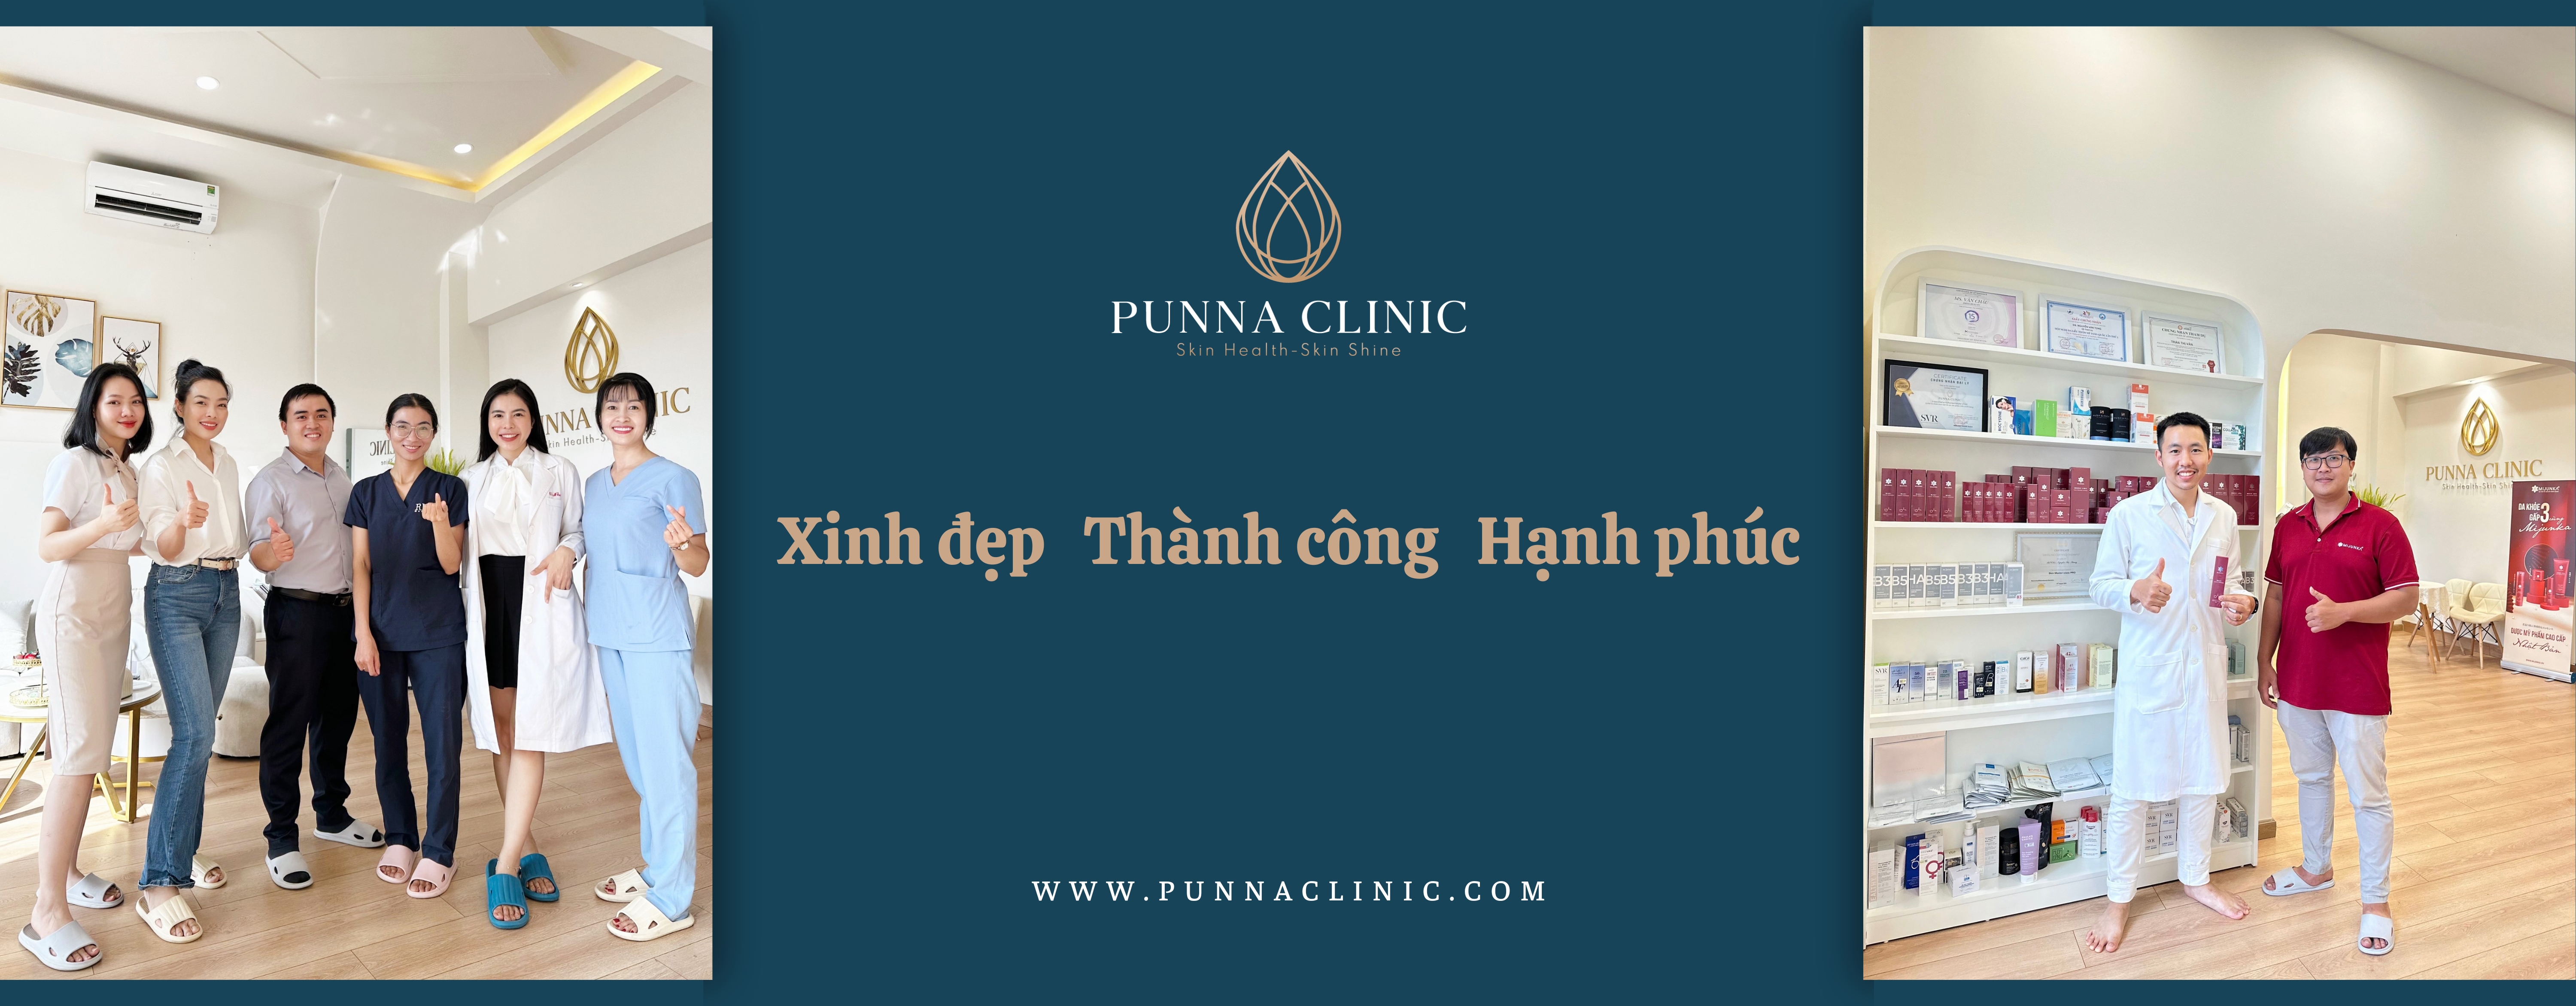 Punna Clinic